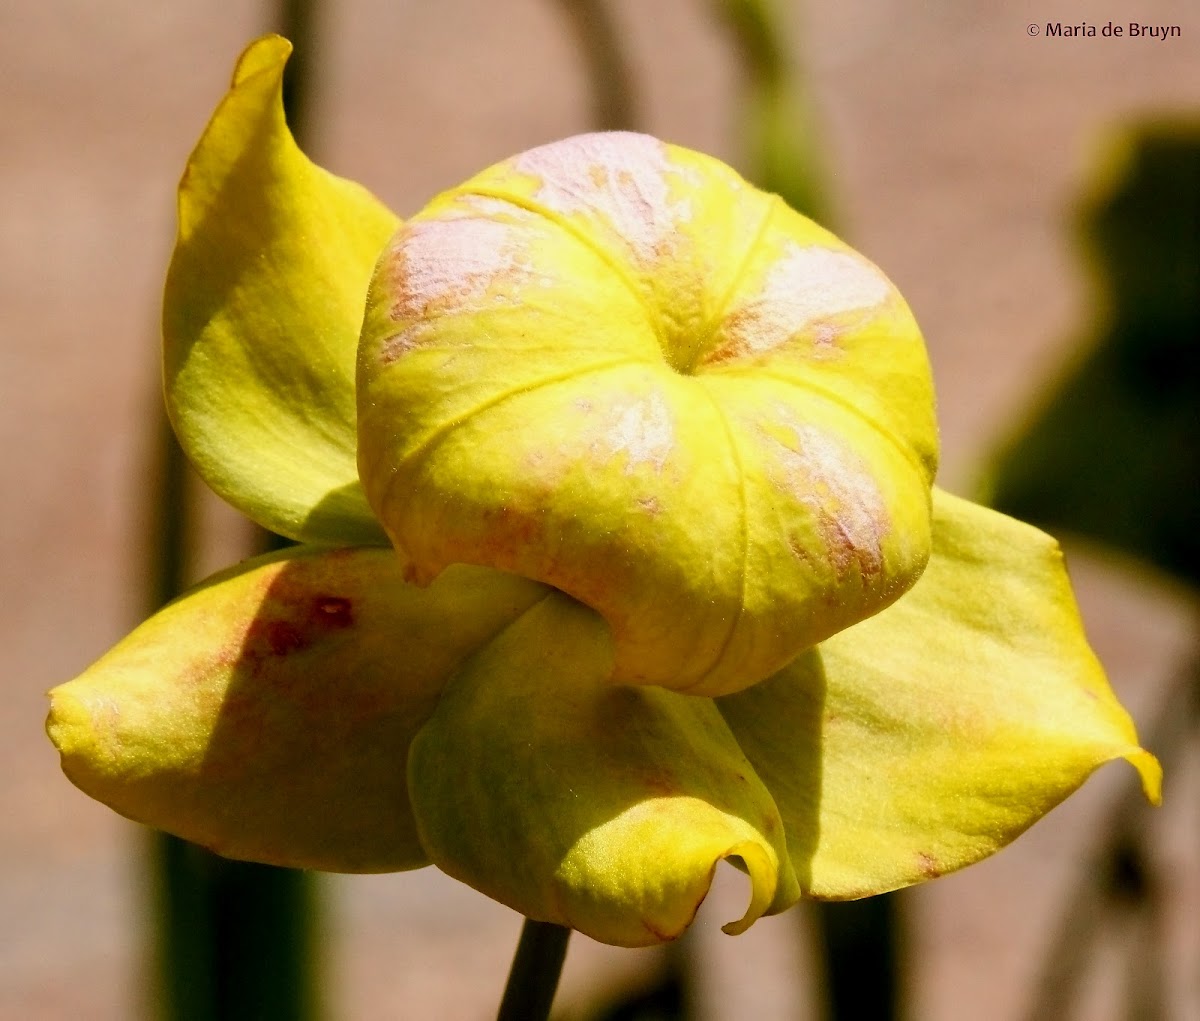 Yellow pitcher plant